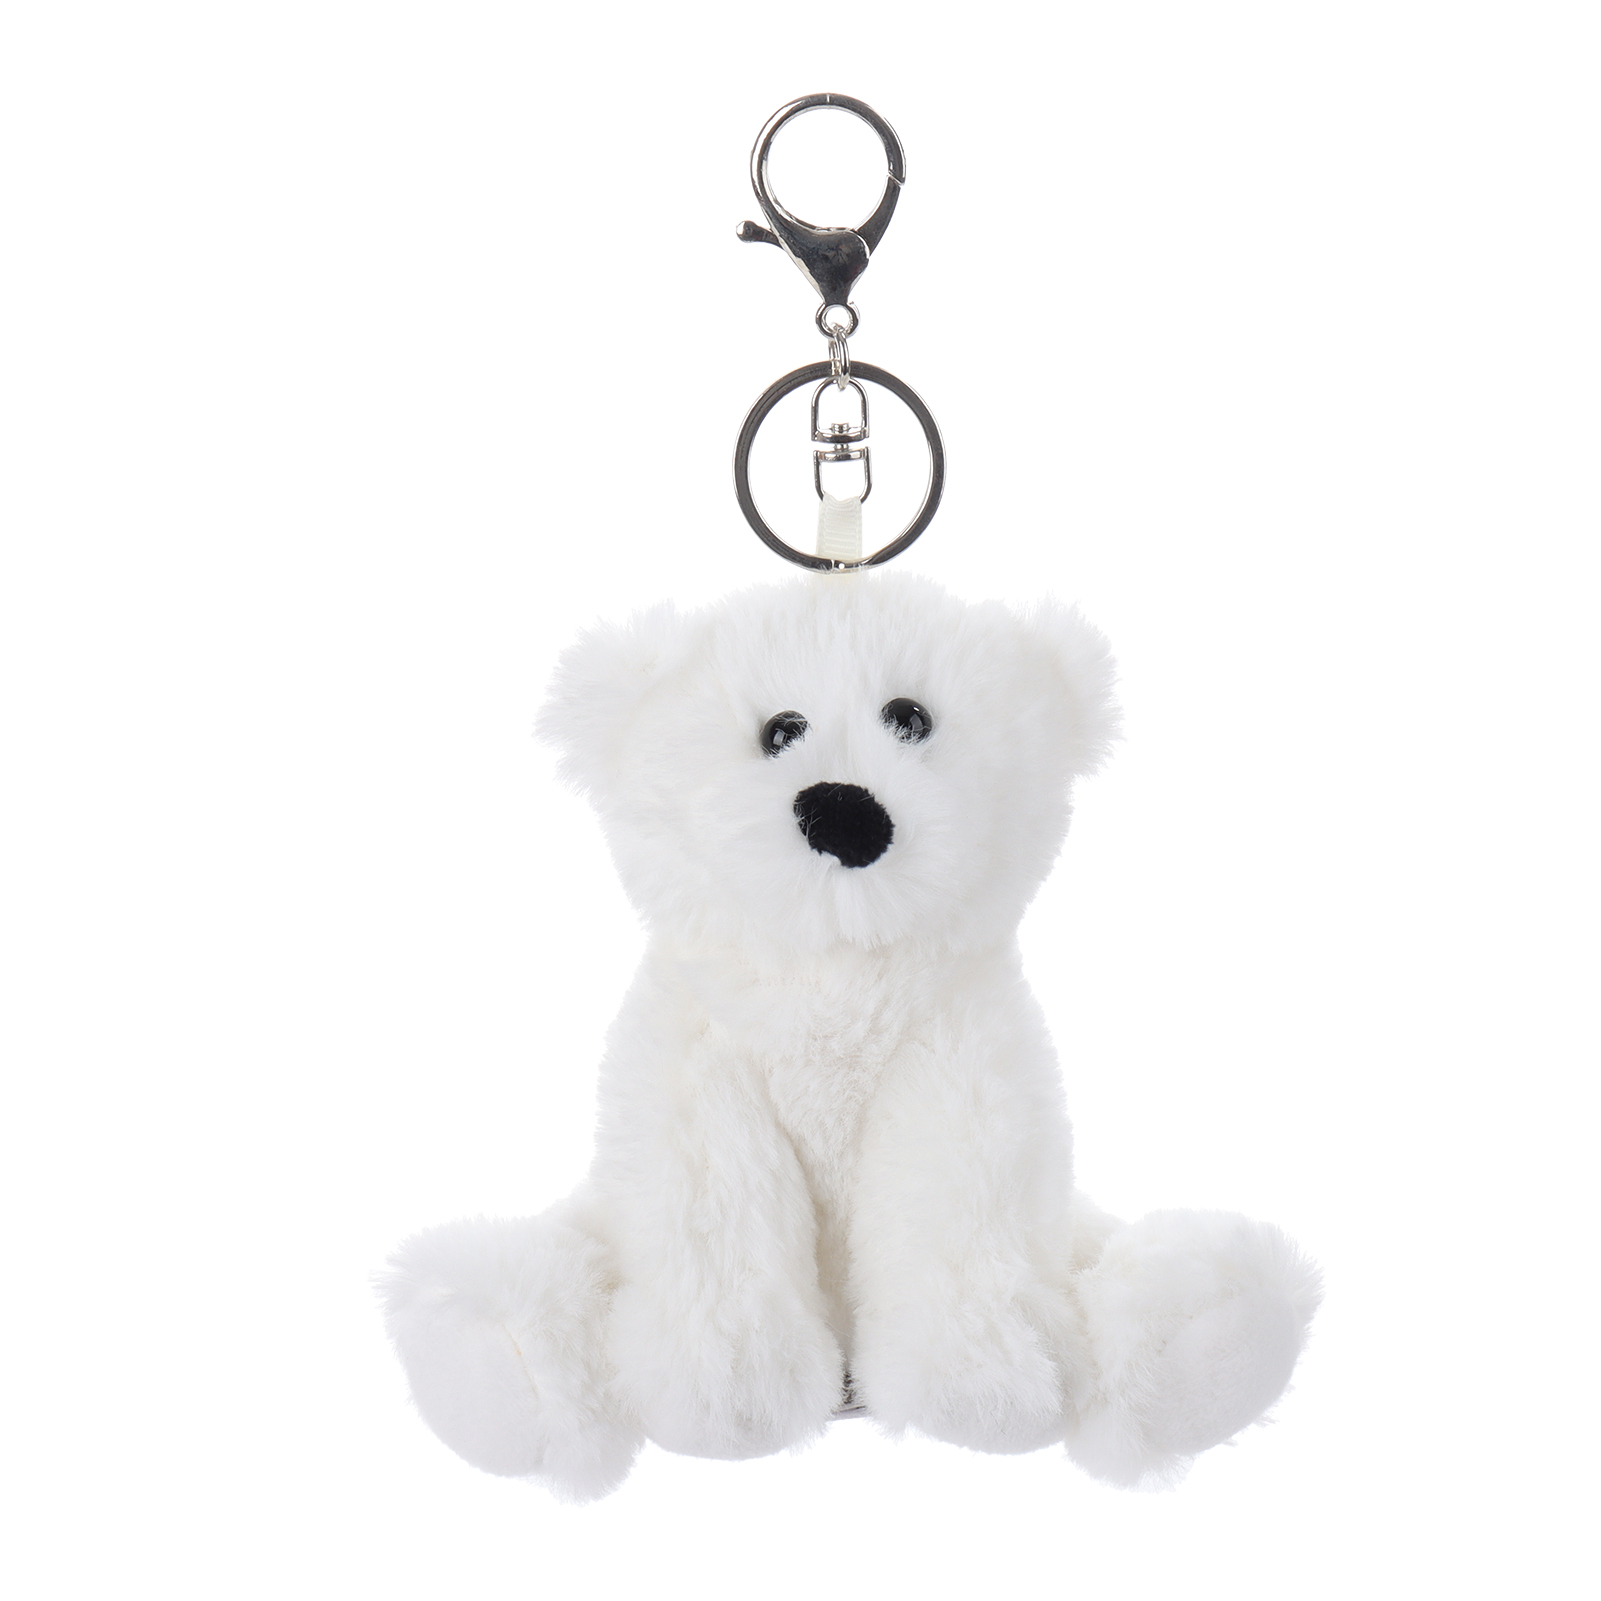 Apricot Lamb Key- White Polar Bear Stuffed Animal Soft Plush Keychian